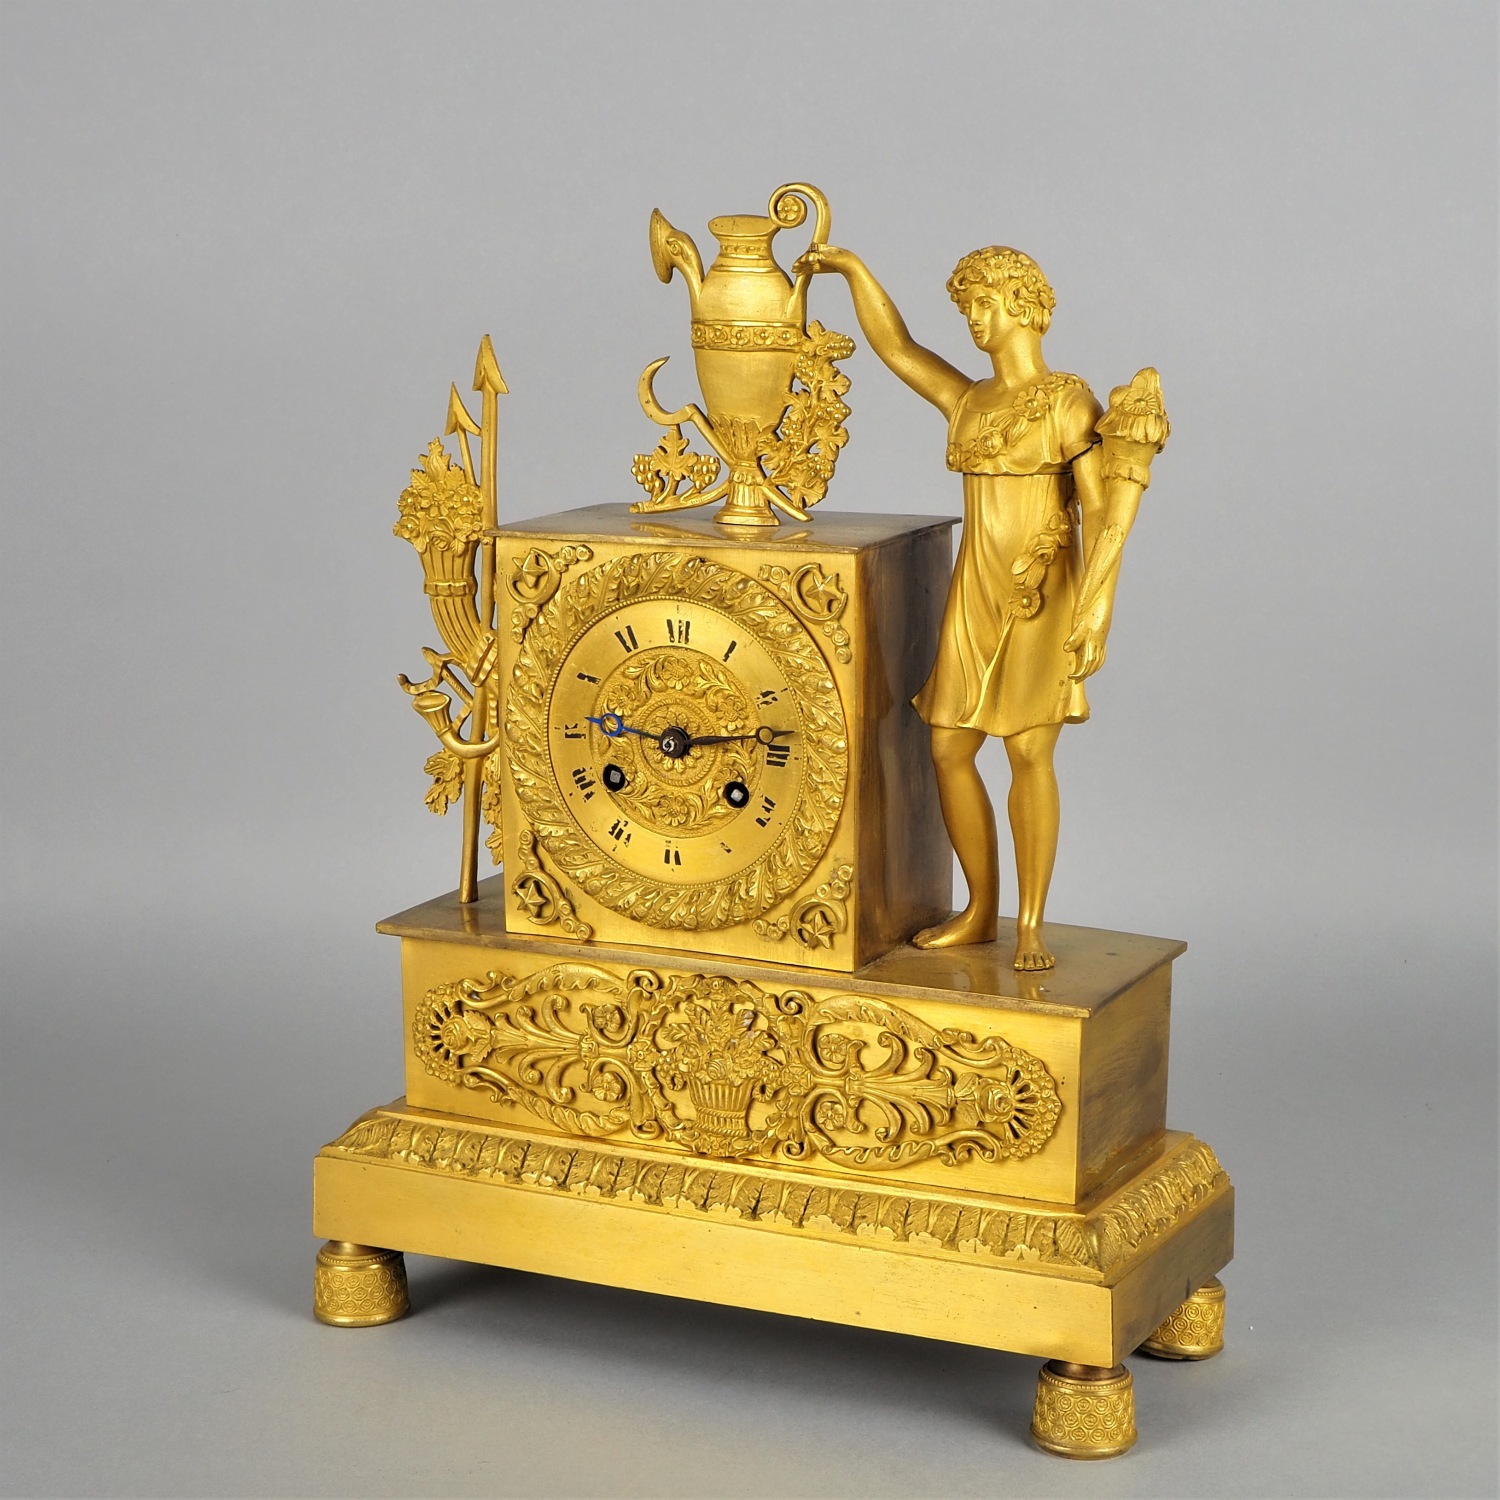 Classicist mantel clock, France around 1800 - Image 2 of 6